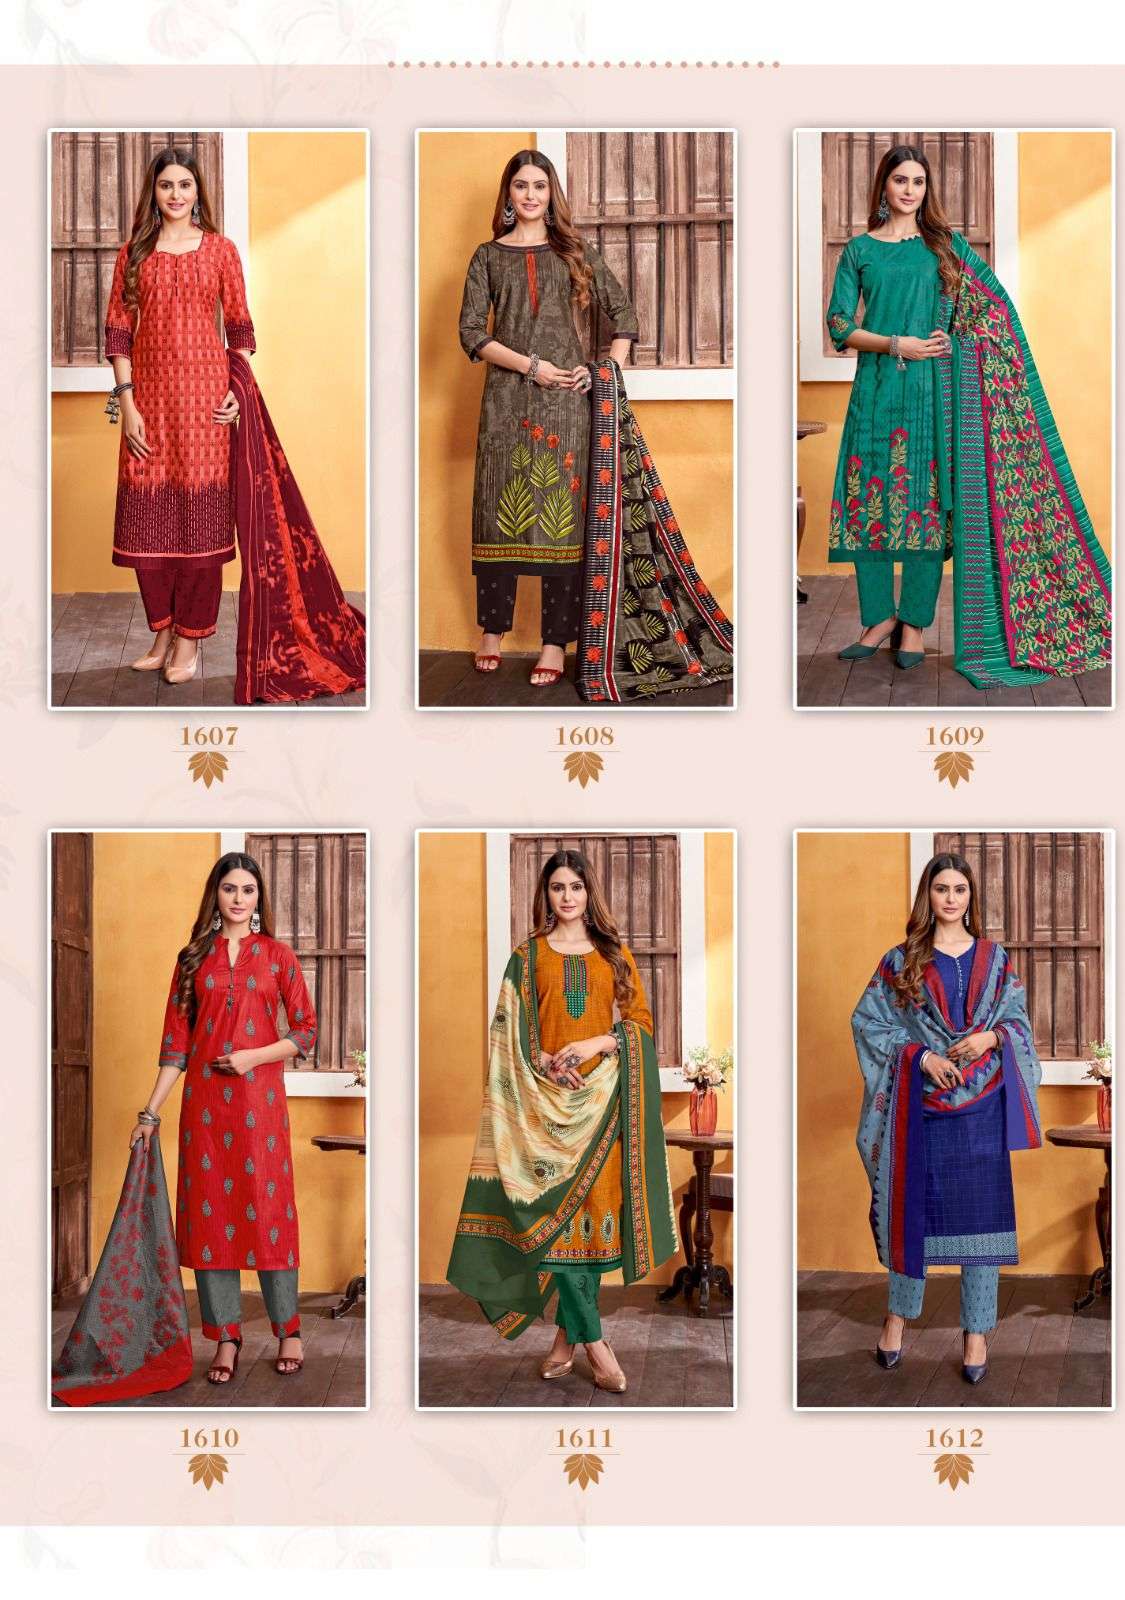 balaji cotton hungama vol-16 1601-1612 series cotton designer dress catalogue online dealer surat 